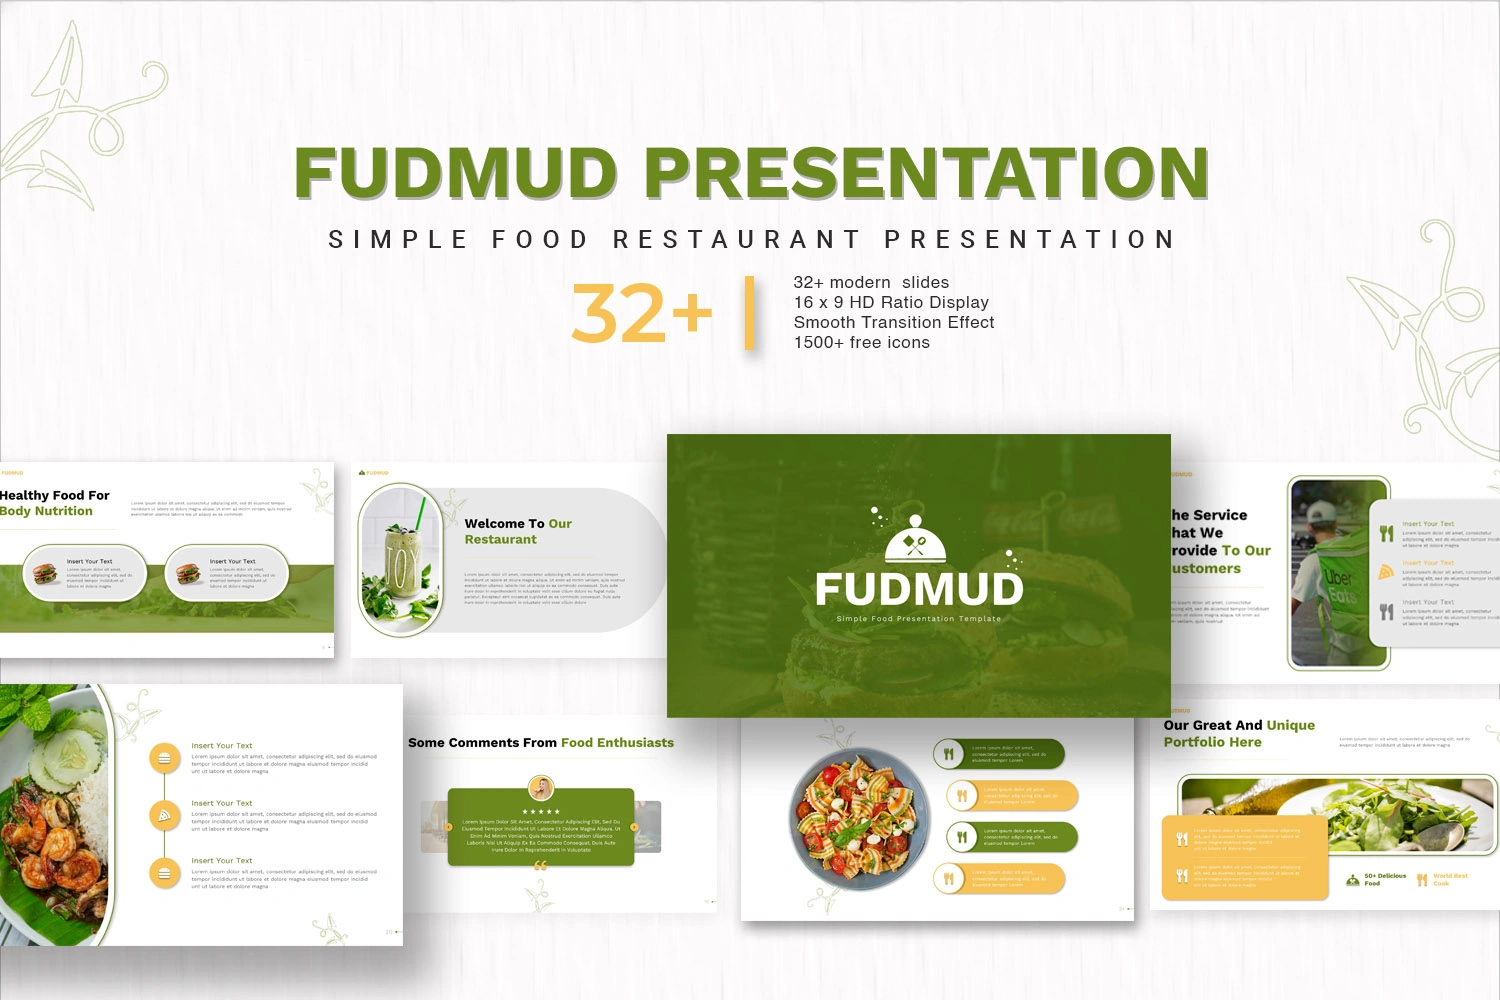 Free Simple Food Restaurant Presentation Template, Fudmud presentation